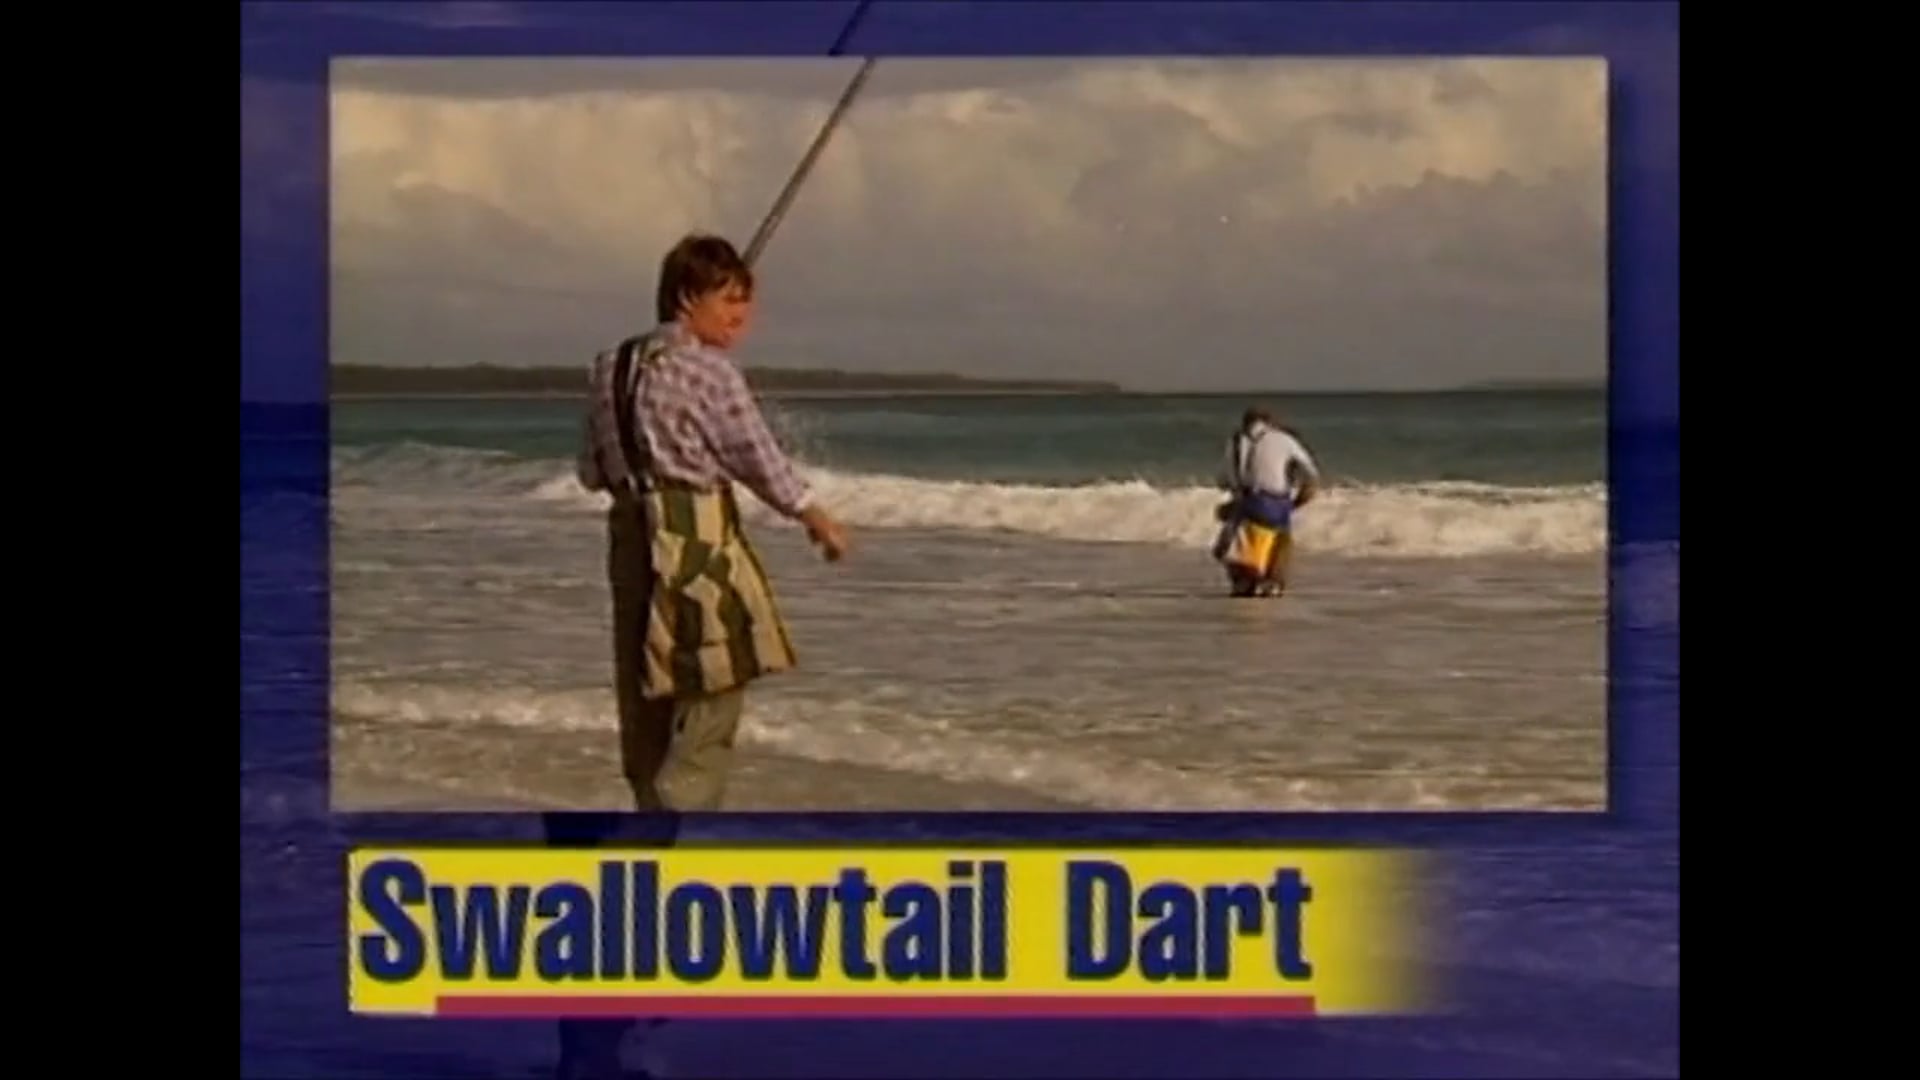 Swallowtail Dart Research – Daryl McPhee – March 1995